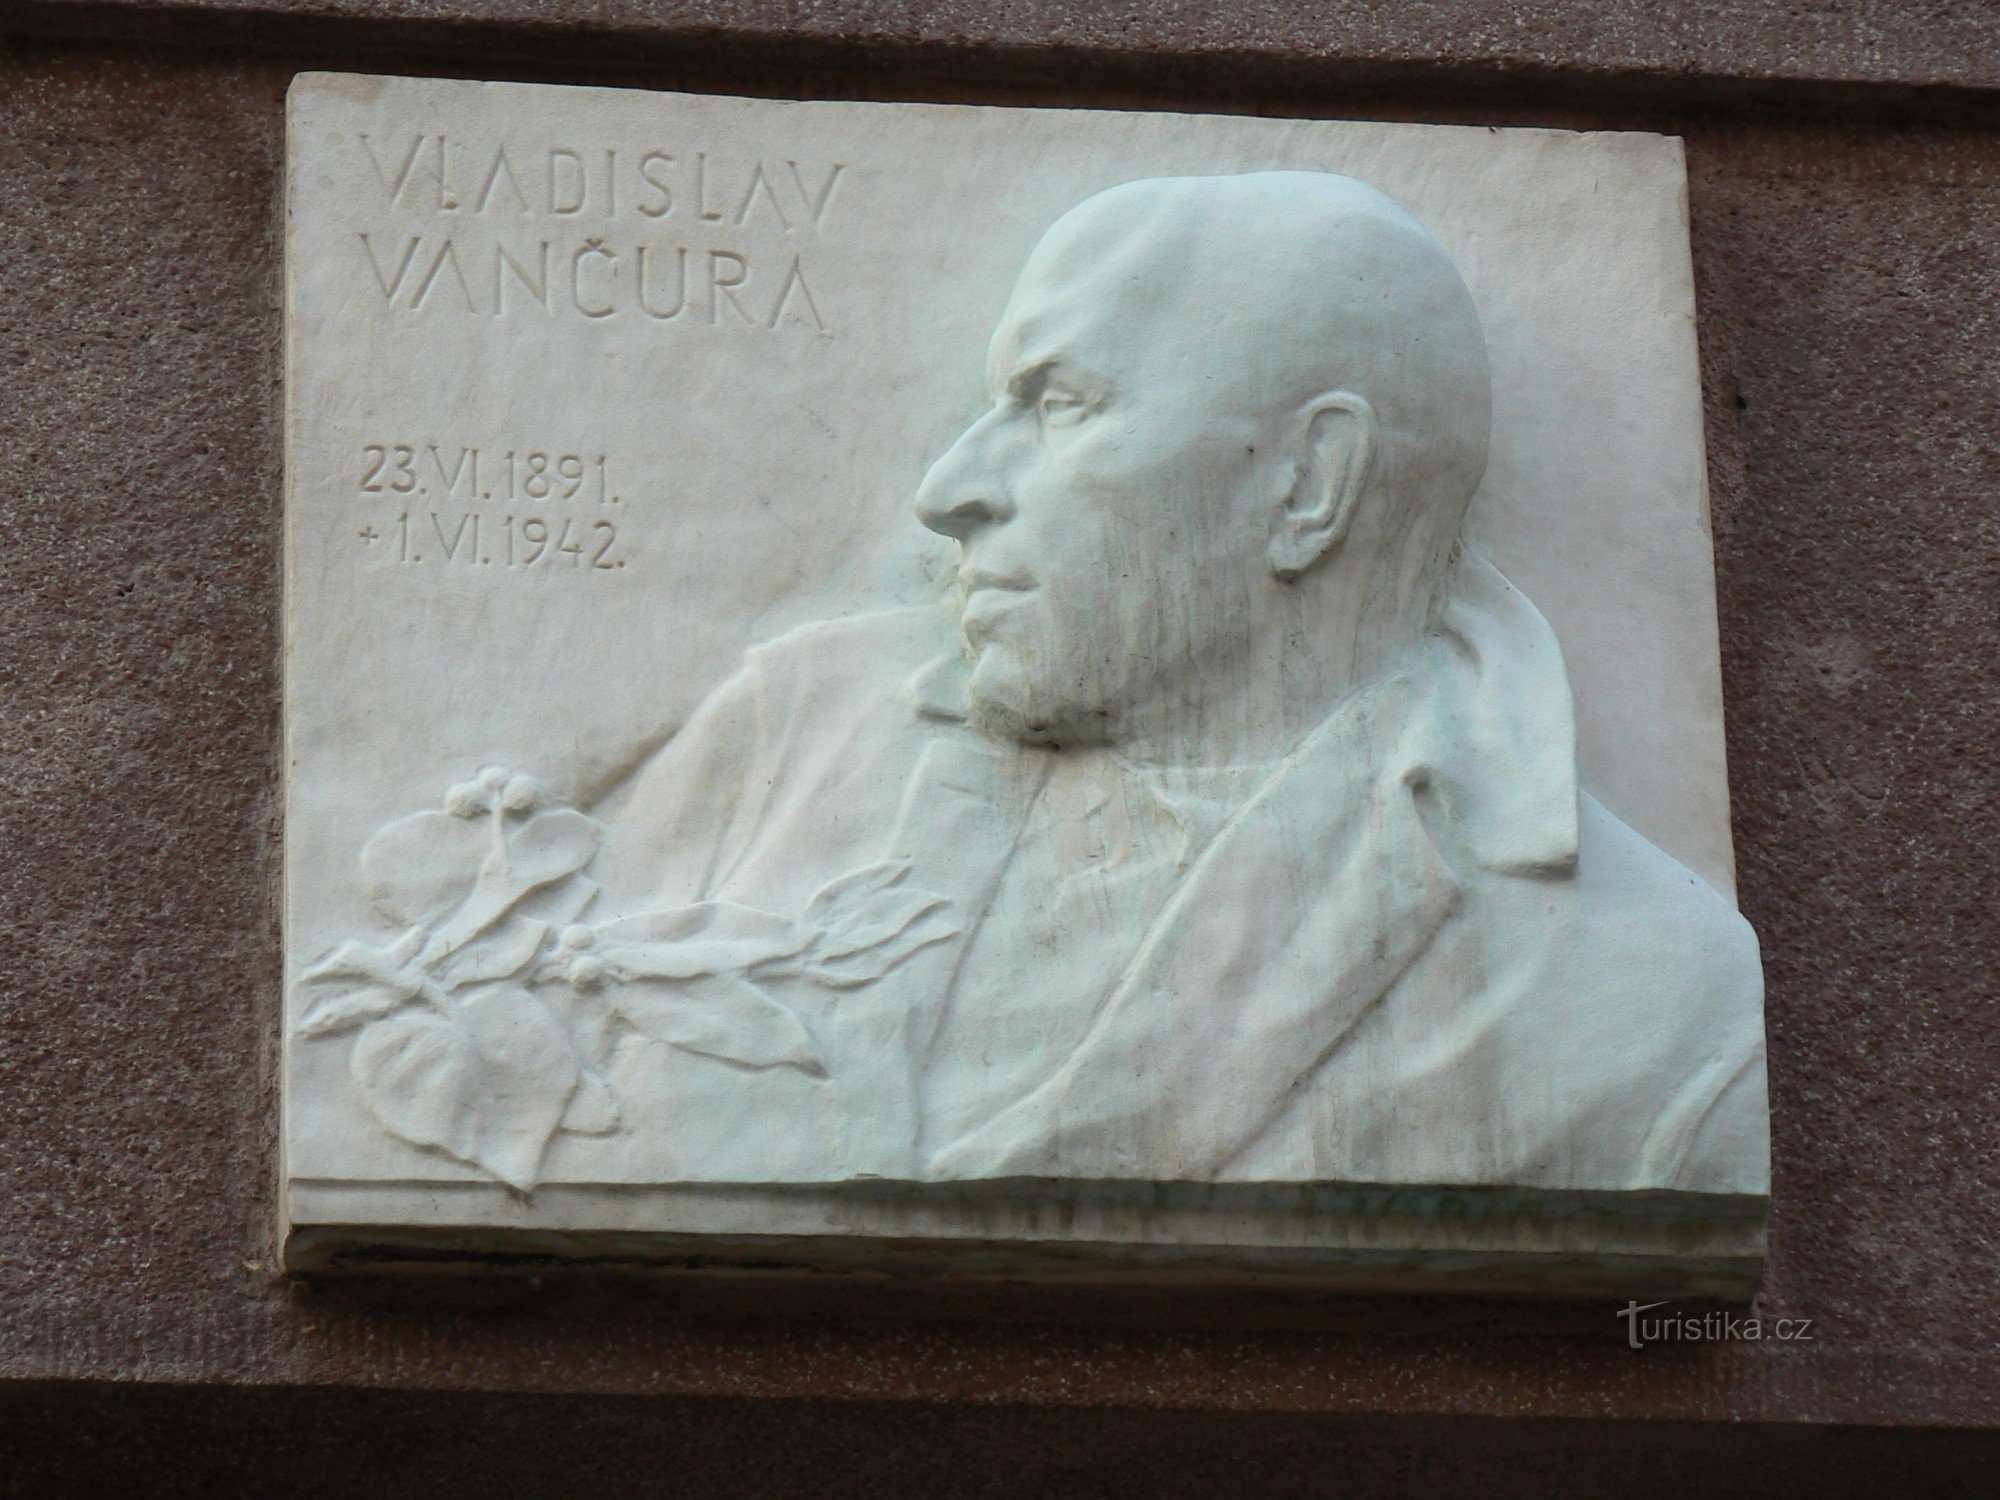 Vladislav Vančura pamětní deska